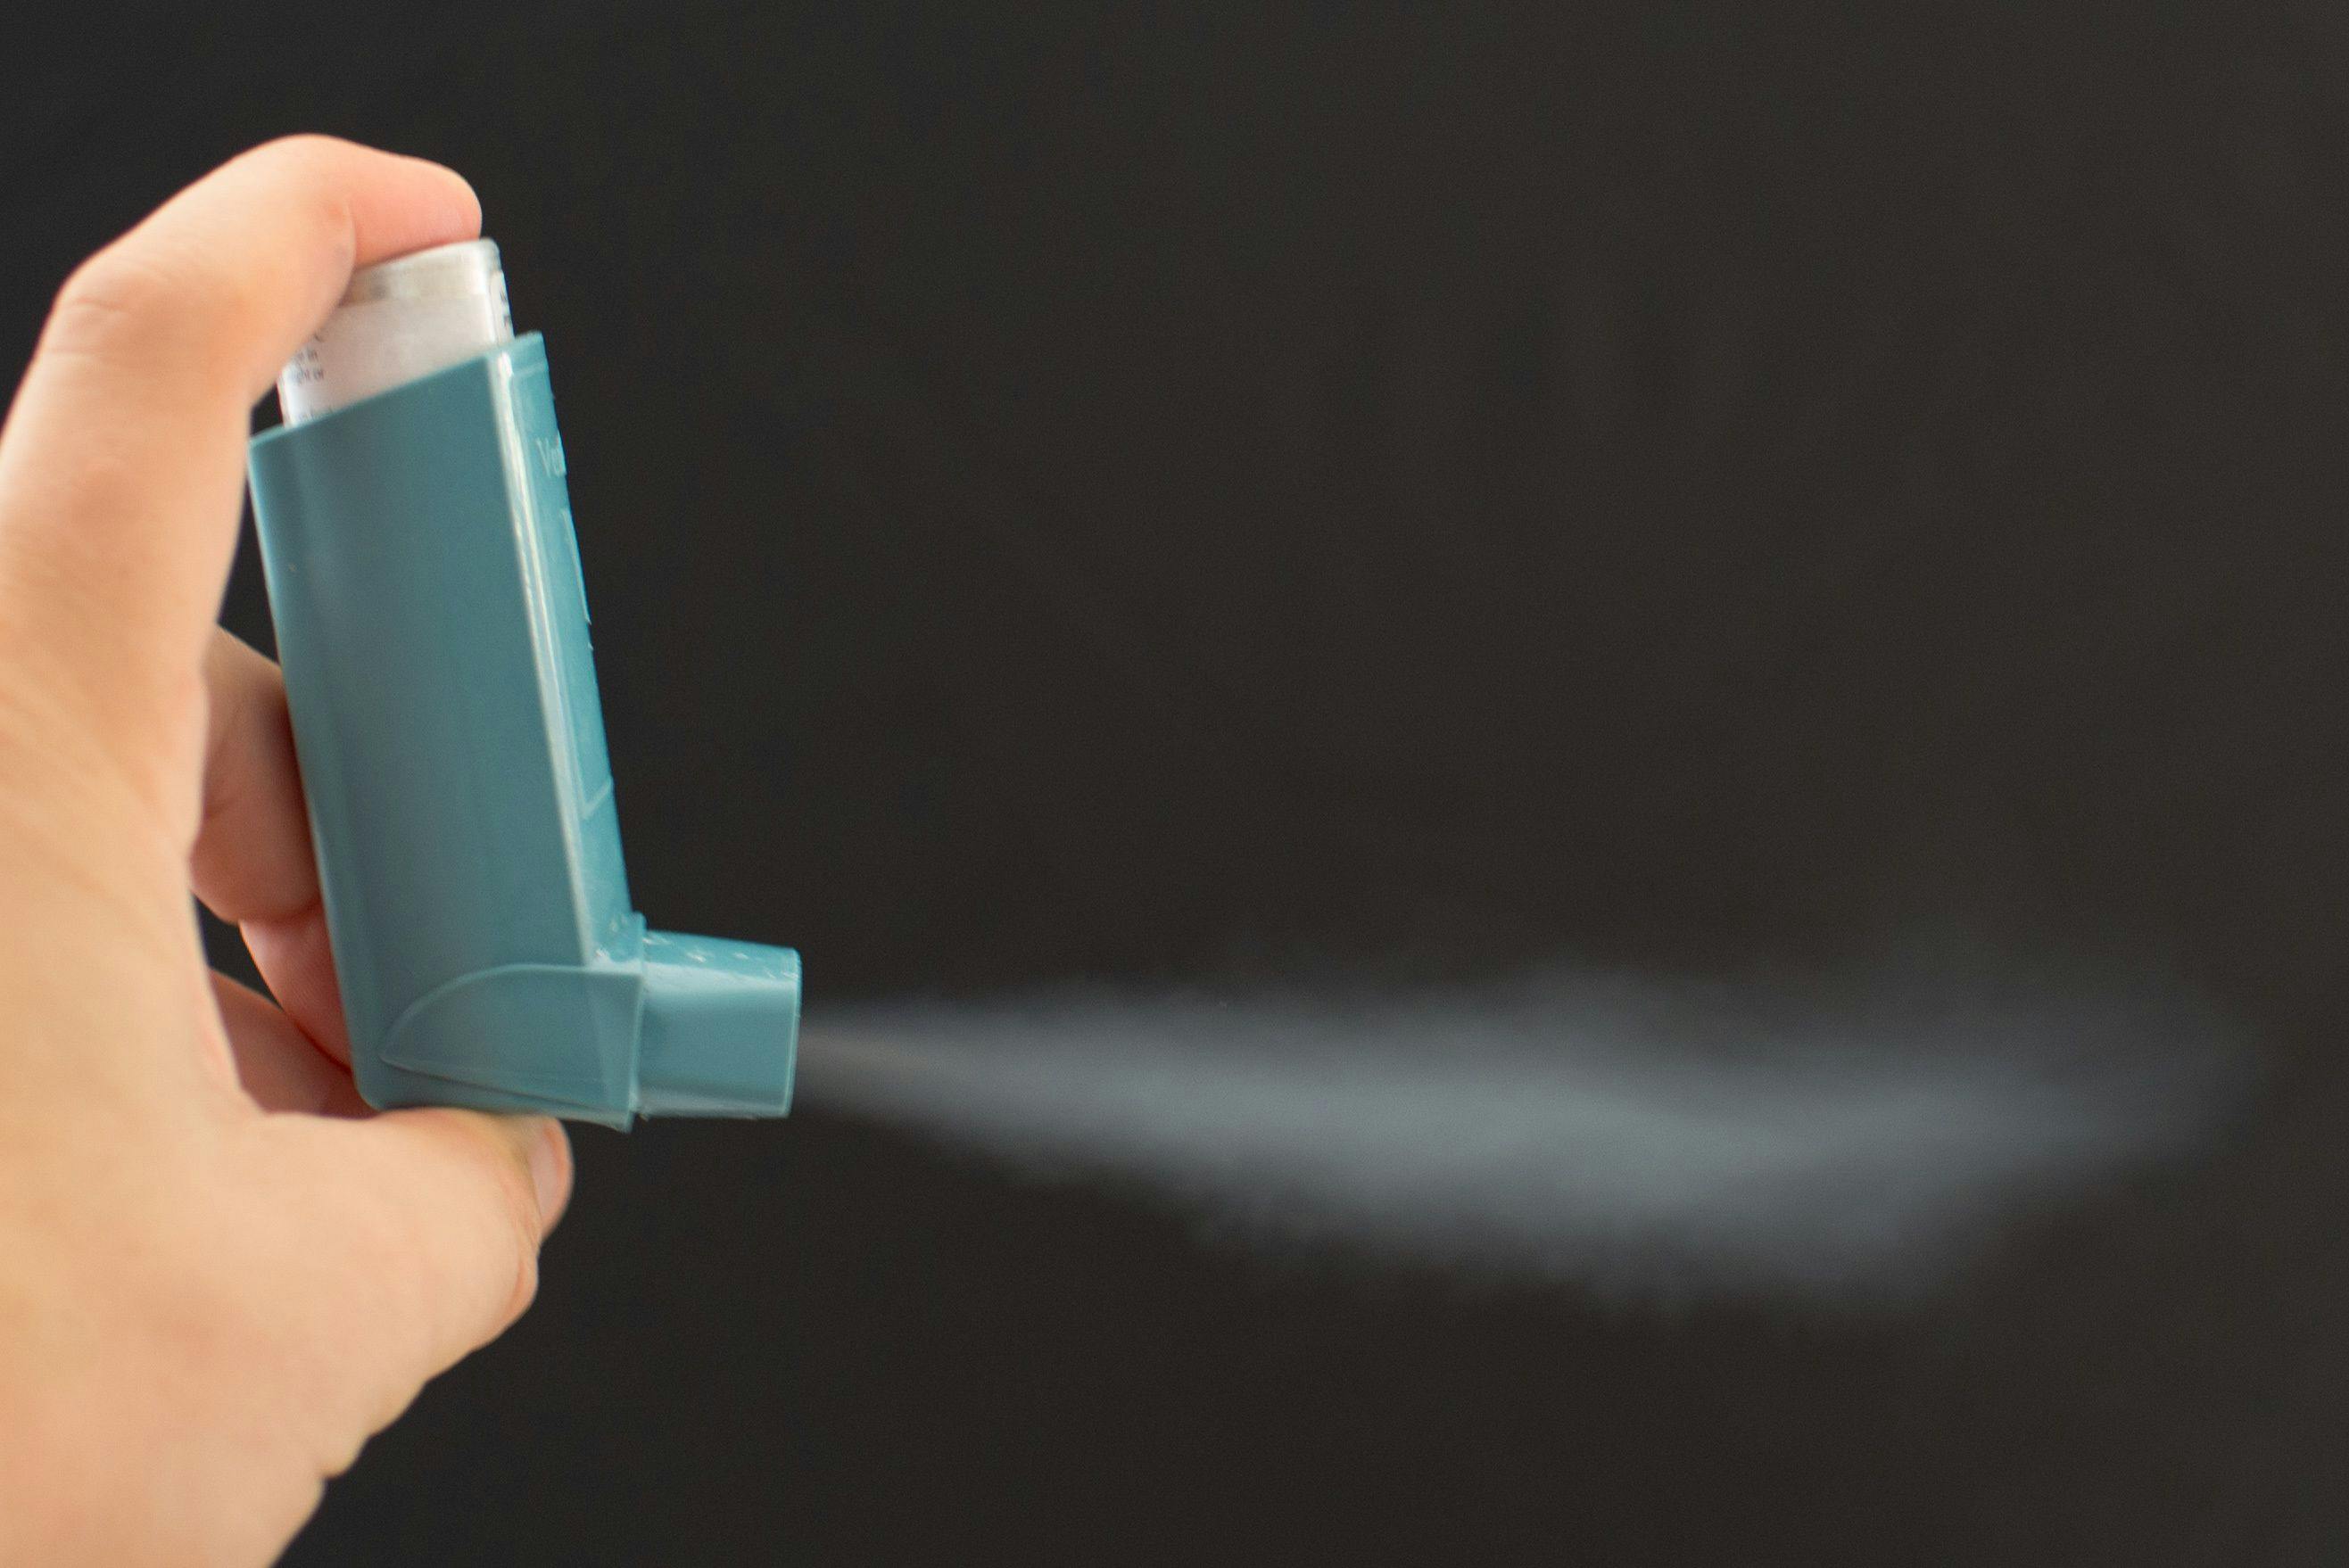 Asthma inhaler / Richard - stock.adobe.com